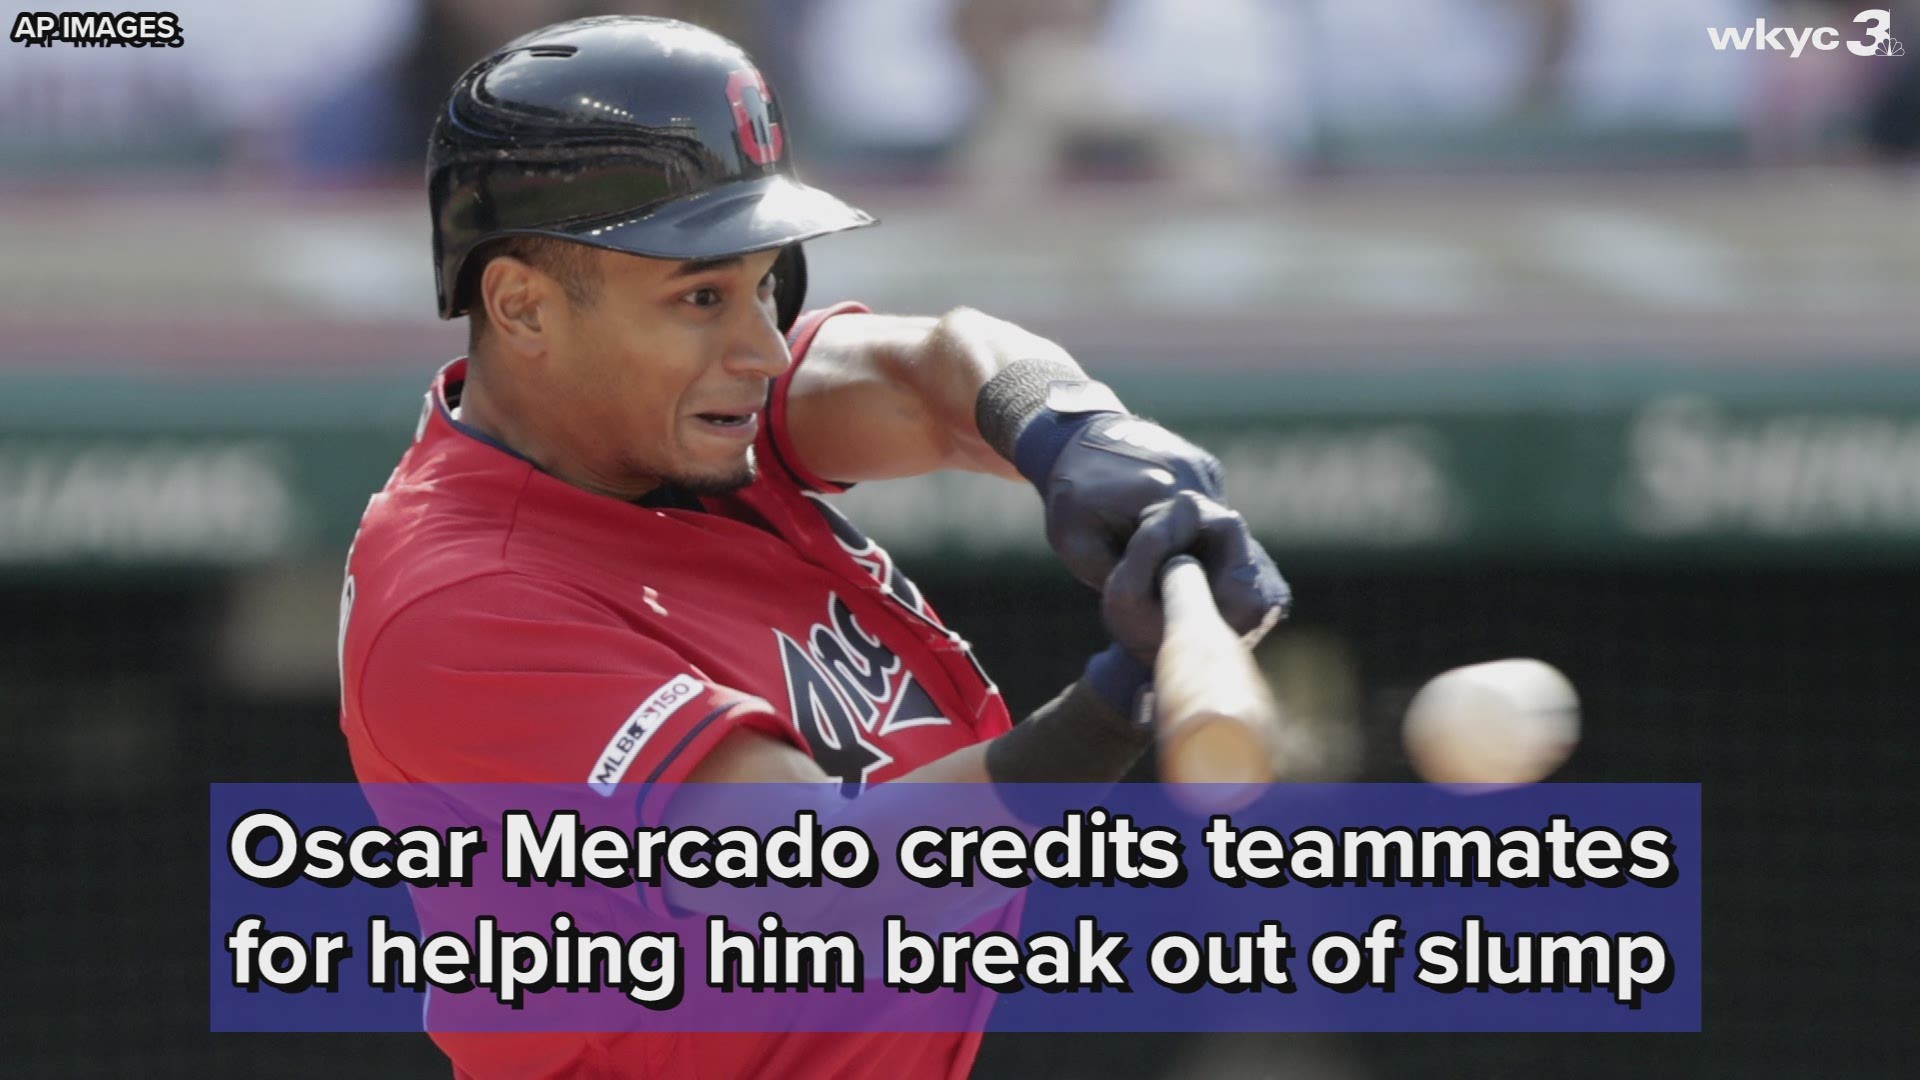 Oscar Mercado has broken out of a recent slump with three home runs in the last two games.